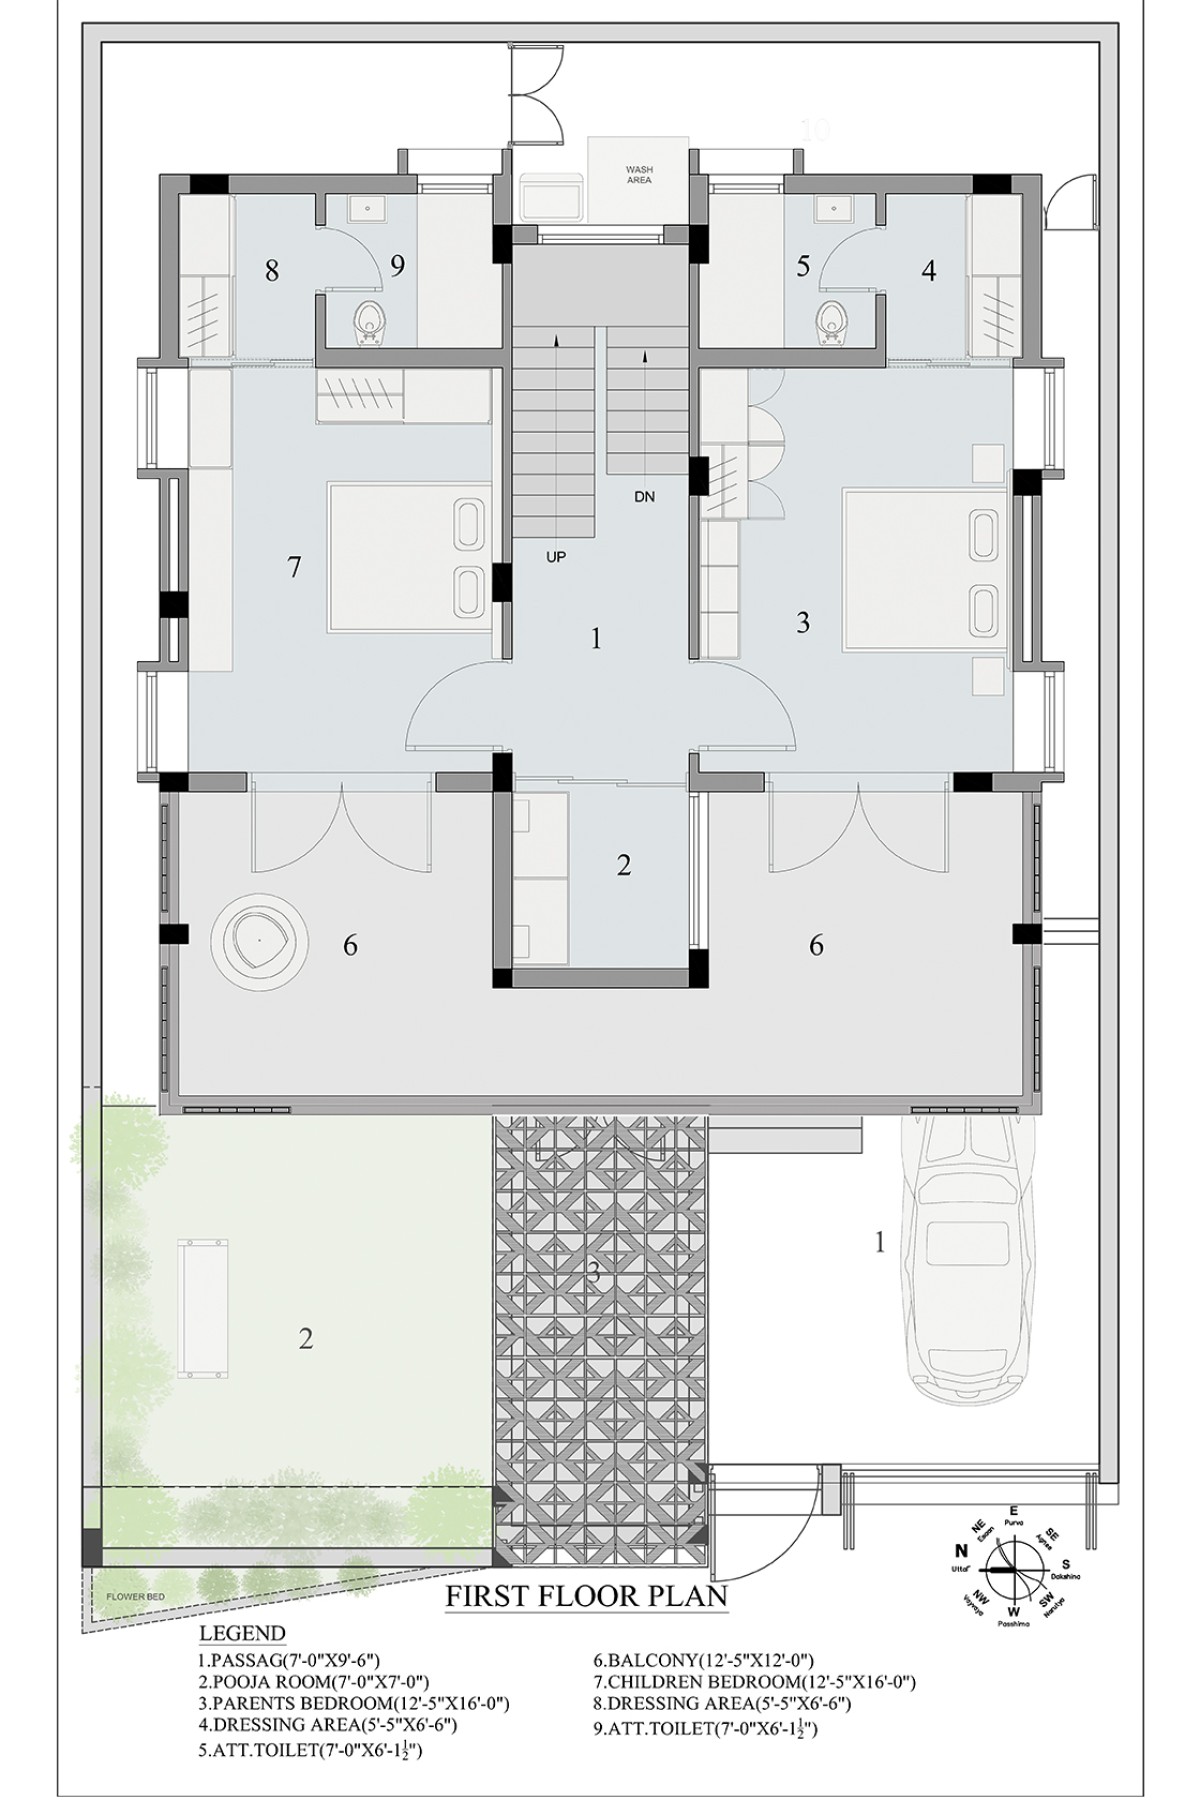 First floor plan of Terracotta Screen House by Zzarna Sstudio